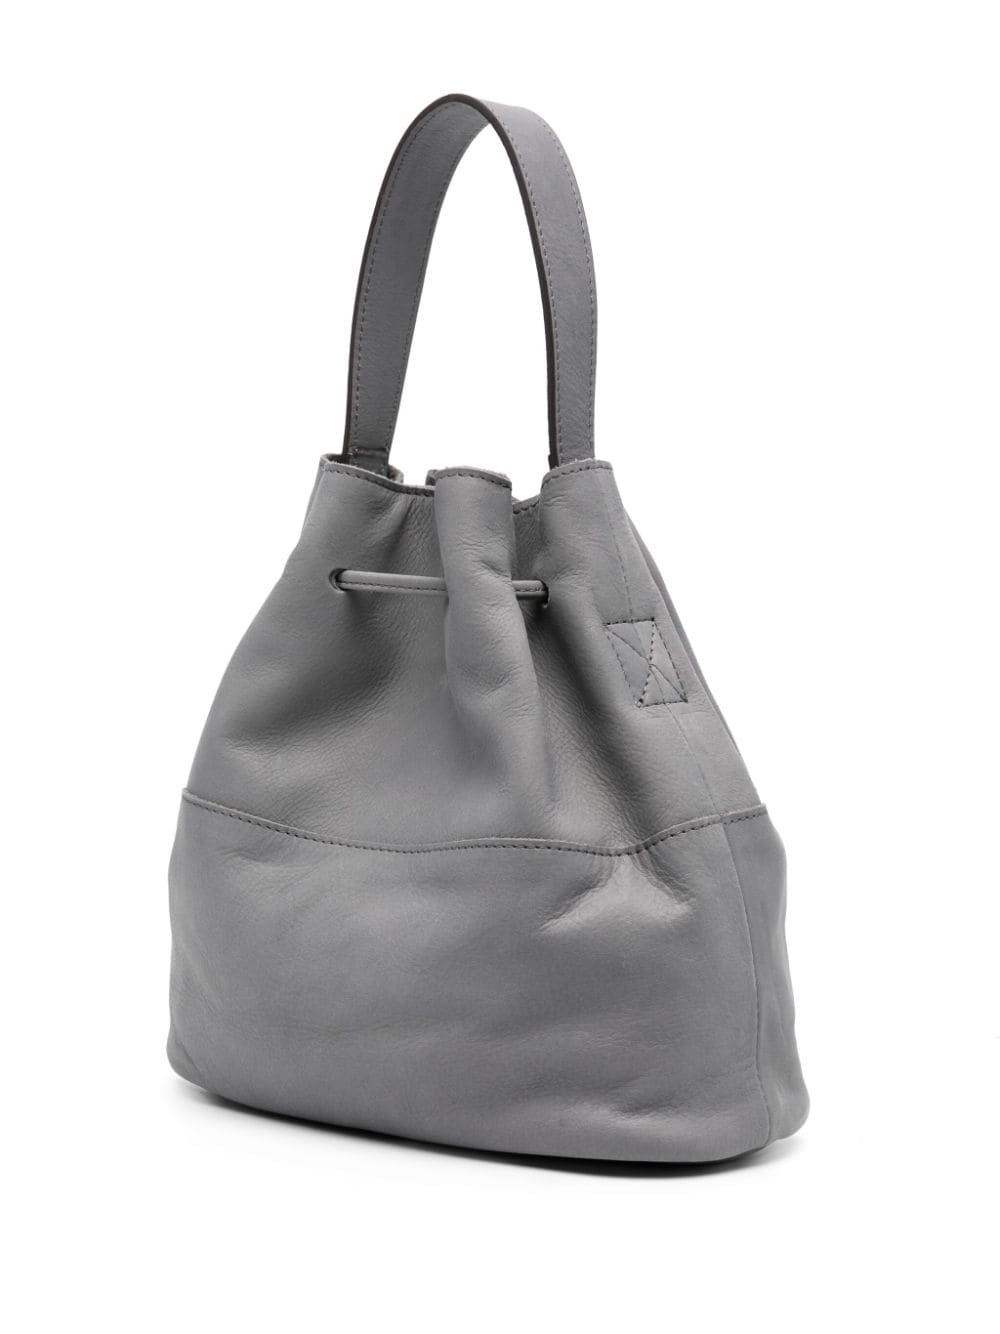 Peserico Bucket Bags for Women - Shop on FARFETCH